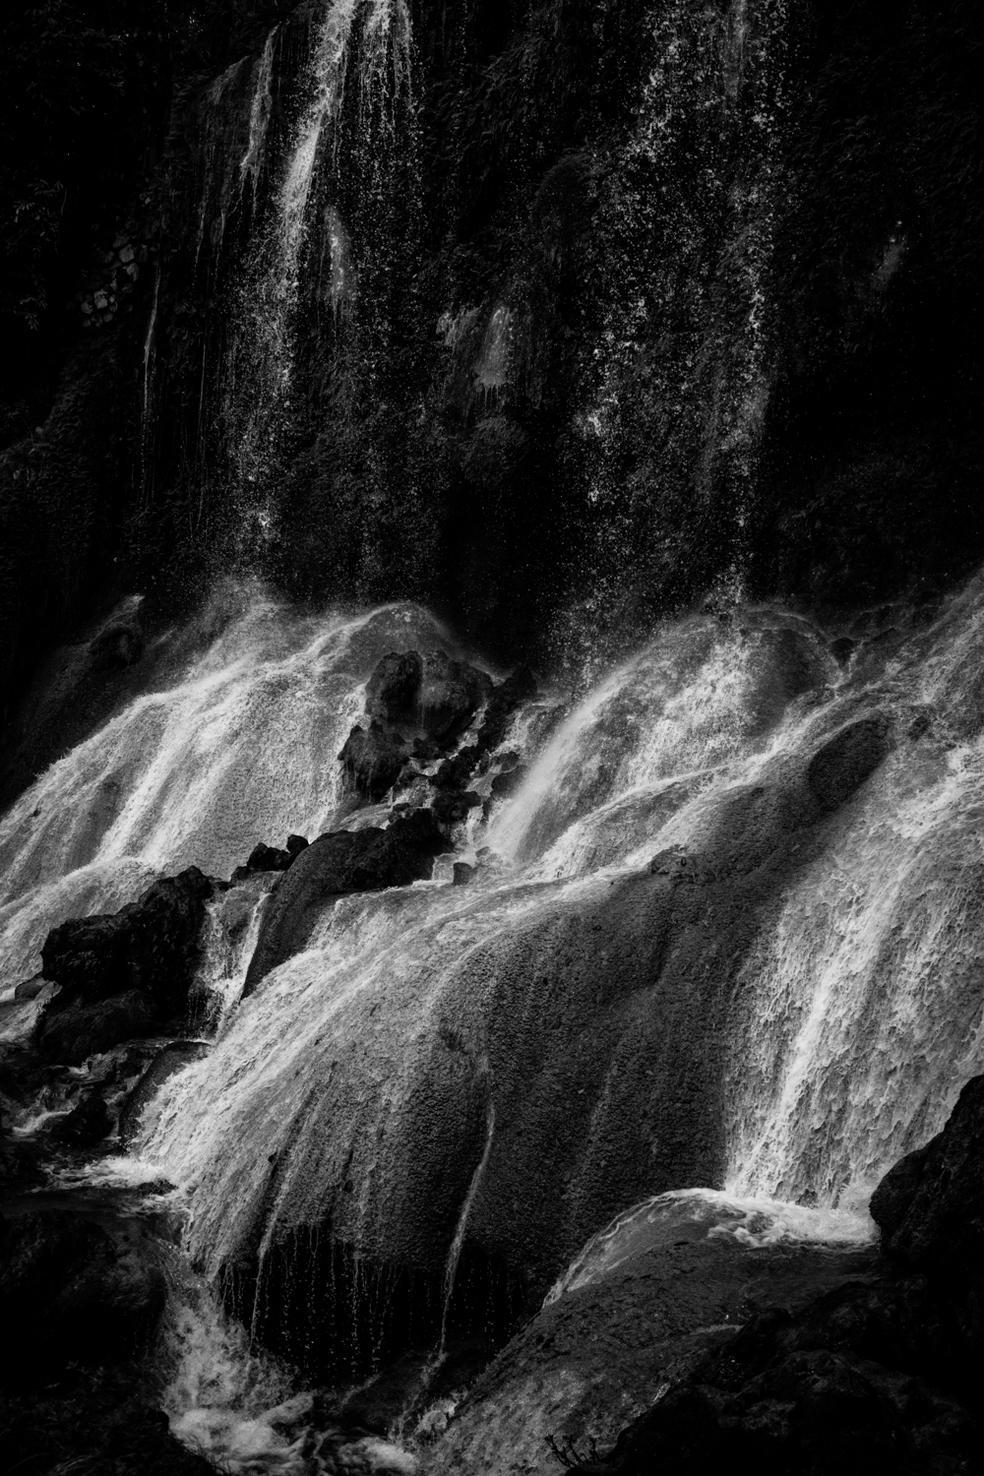 El Nicho waterfalls